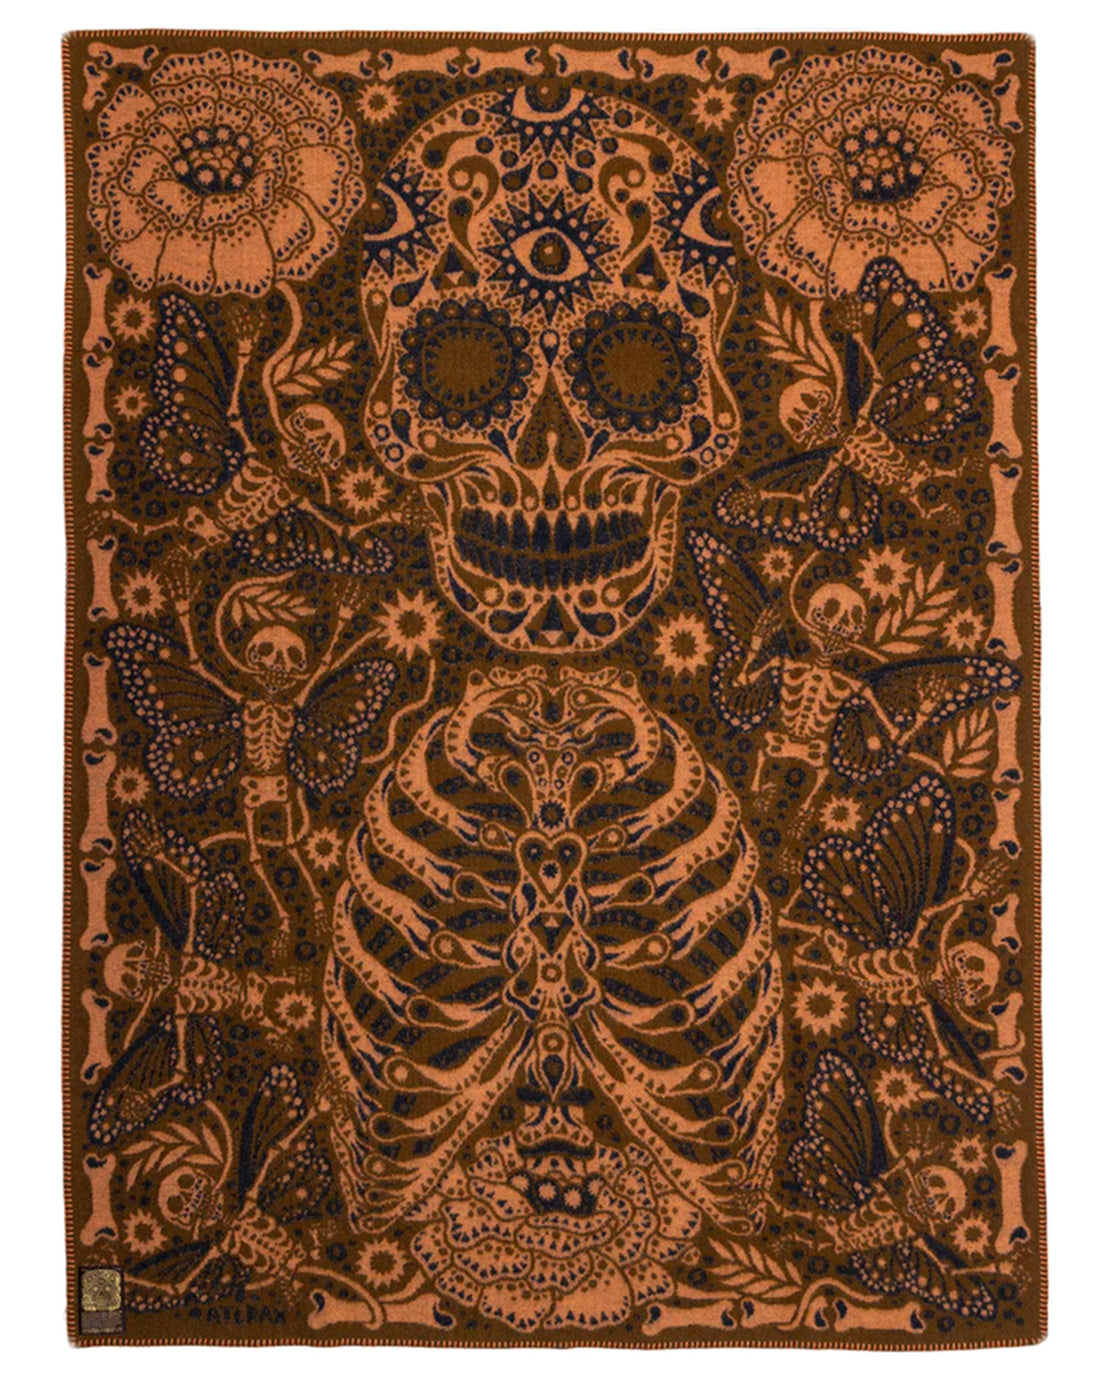 Indigofera 10 Skull Blanket Project #6 - Dia De Muertos - Standard & Strange